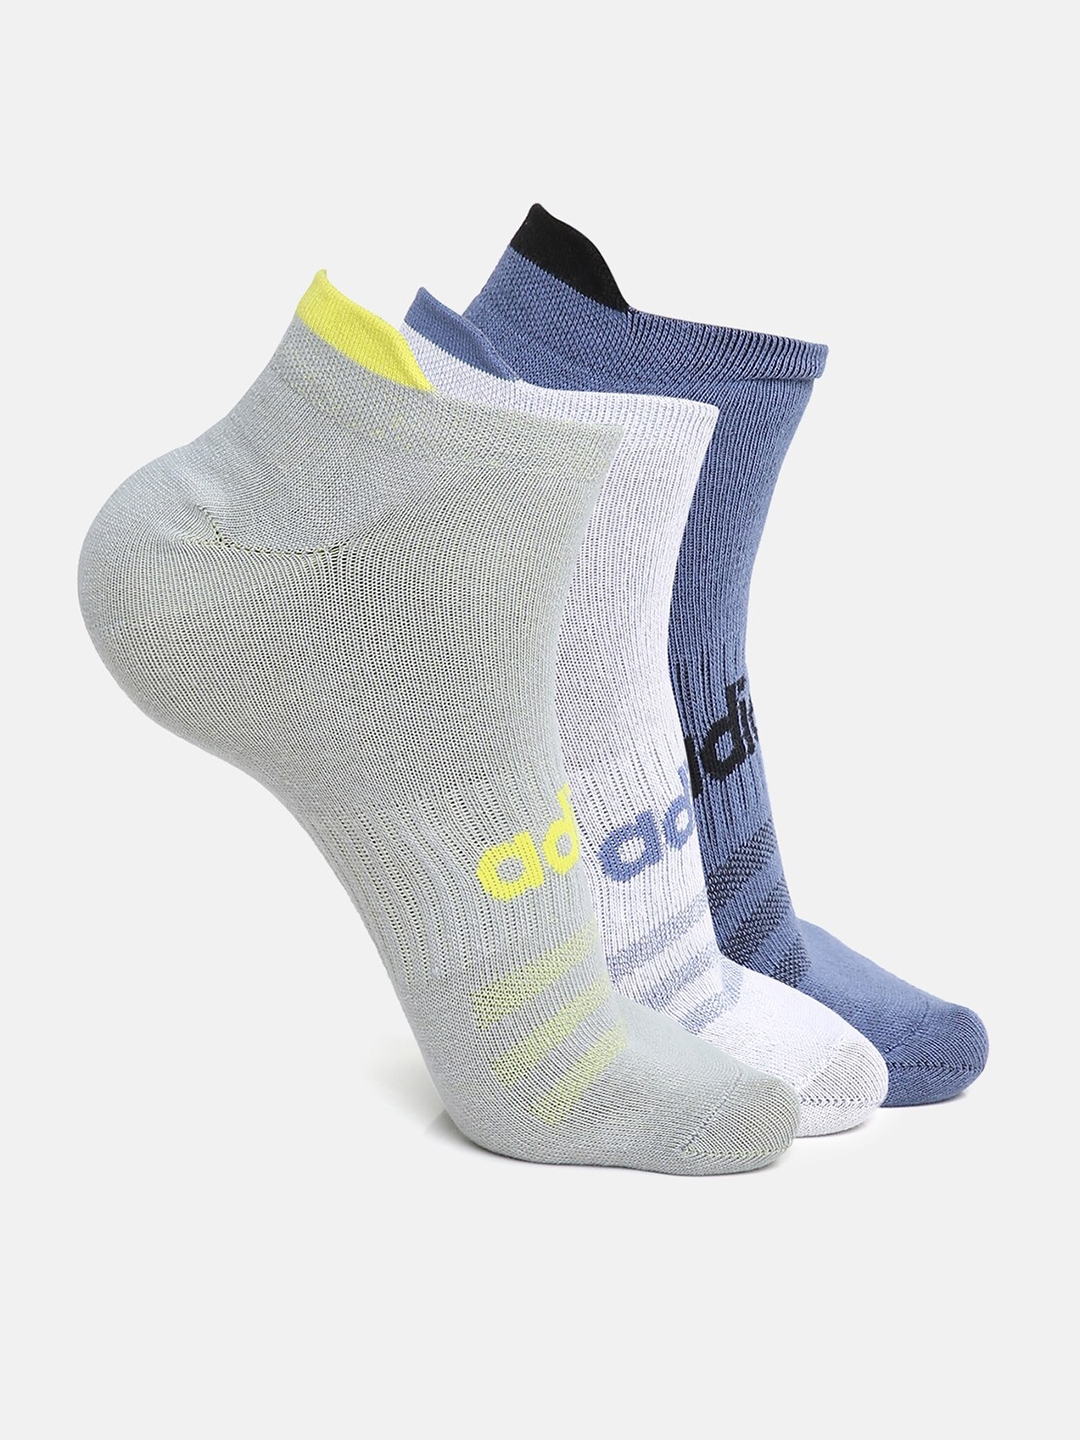 ADIDAS Men White   Blue Pack of 3 Patterned Low Cut Socks